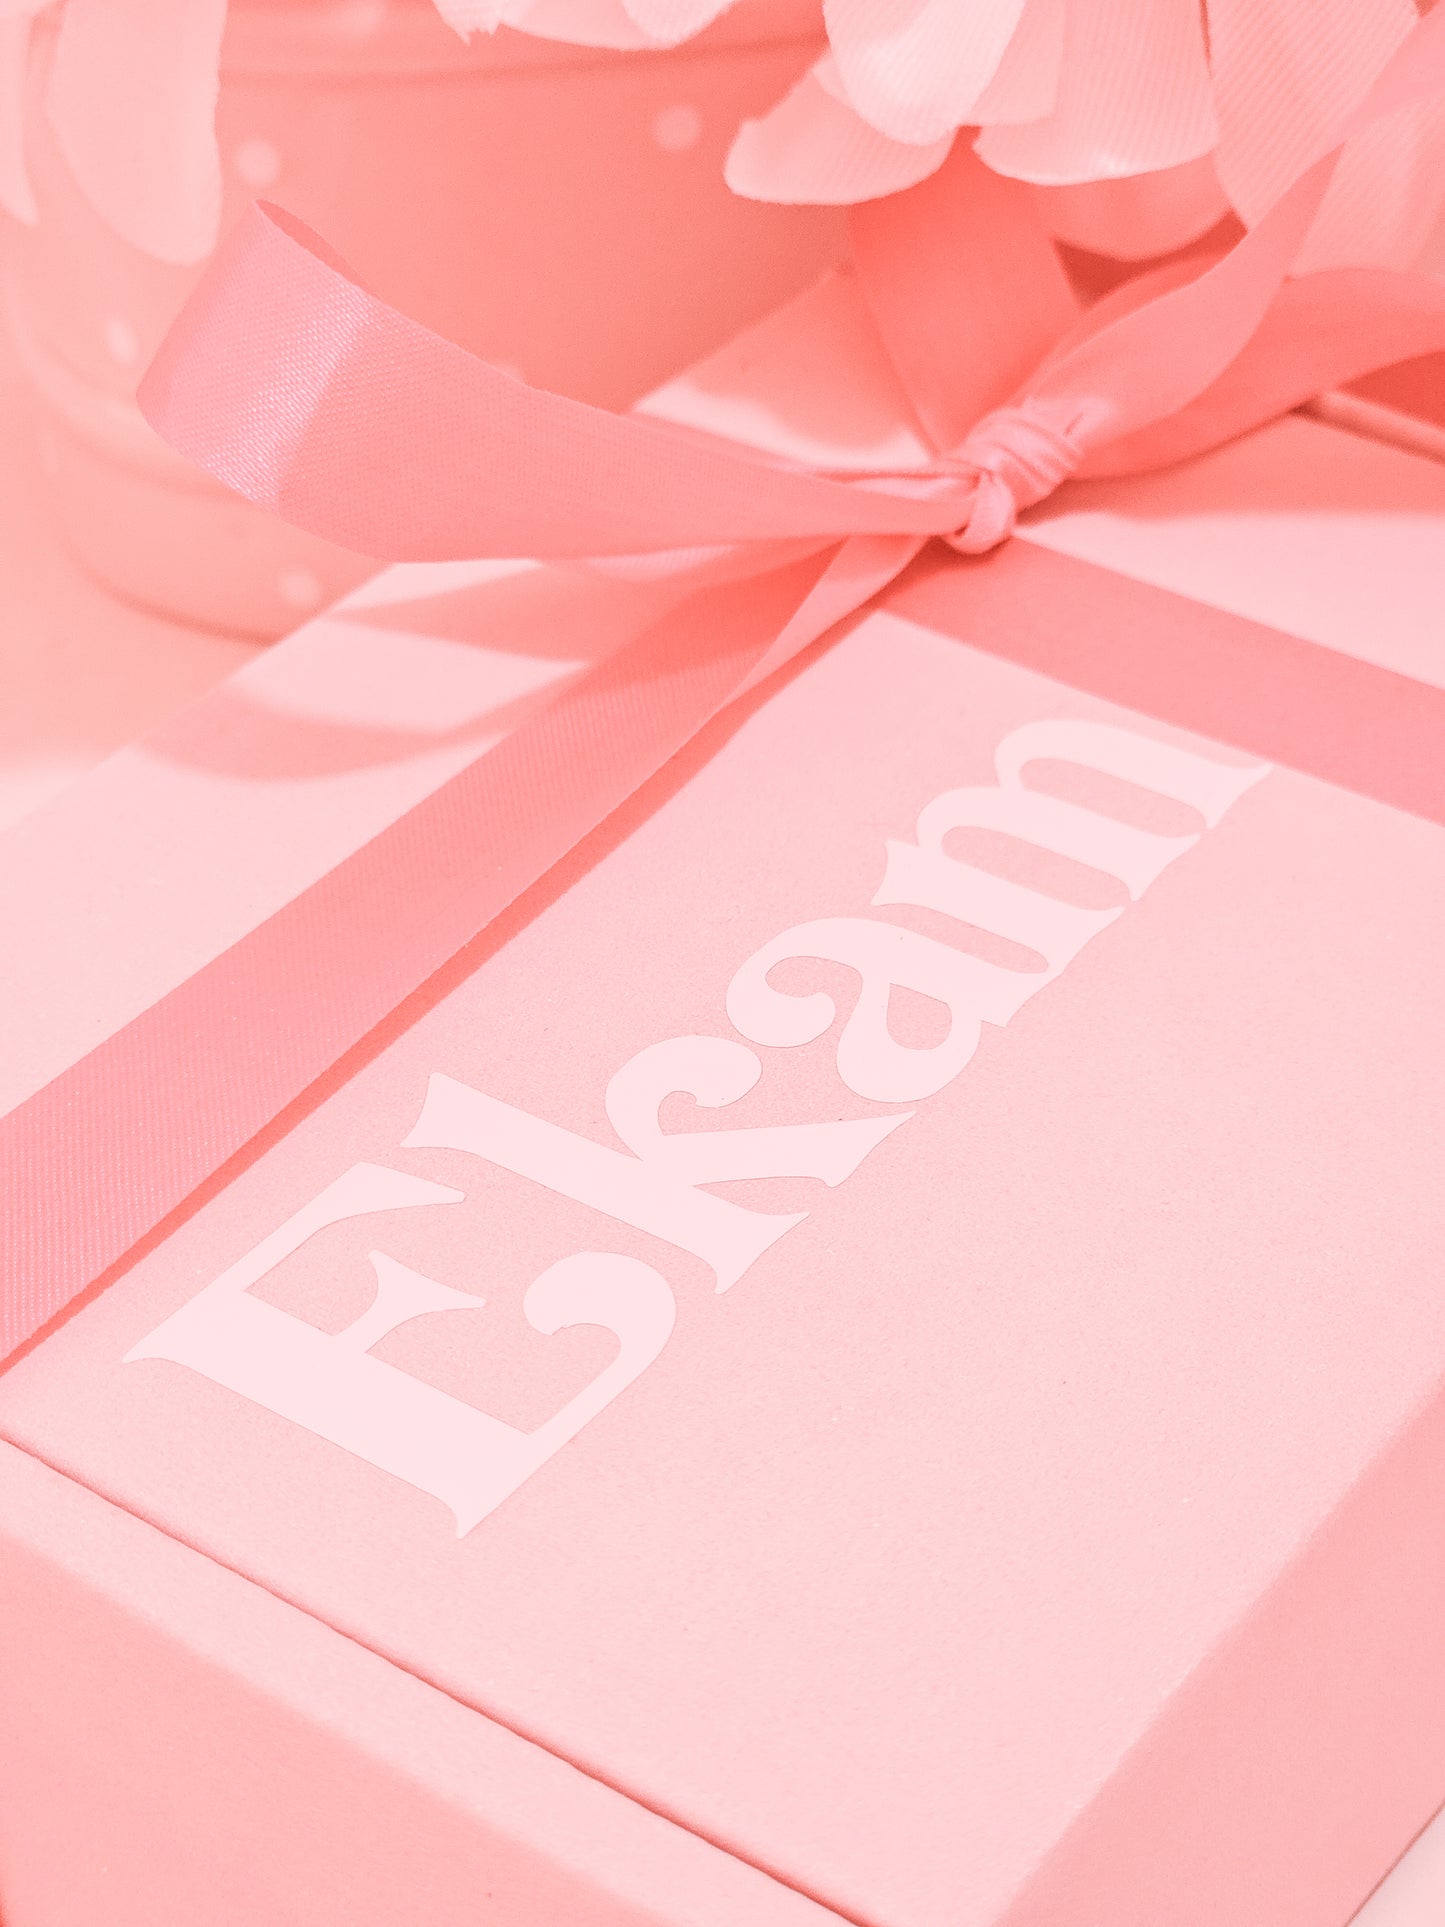 Pink Box Ekam Jeweler's - February